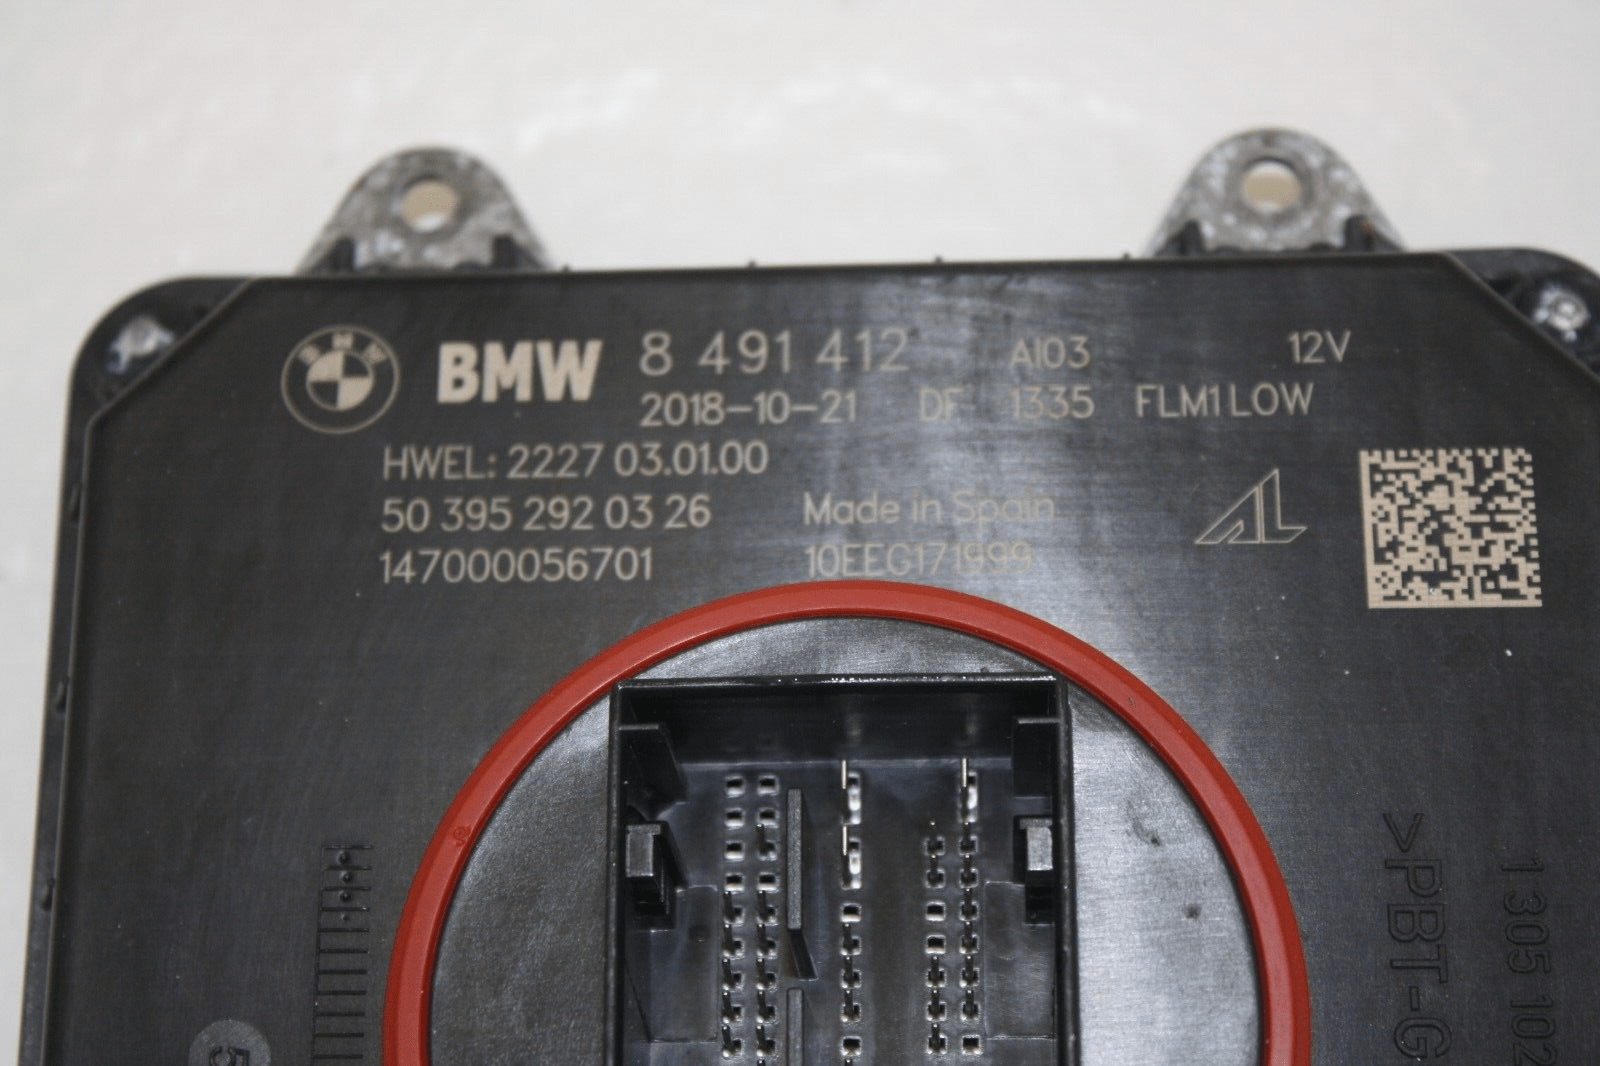 BMW-5-Series-G30-G31-Headlight-Control-Unit-Module-2018-8491412-Genuine-176251186866-5